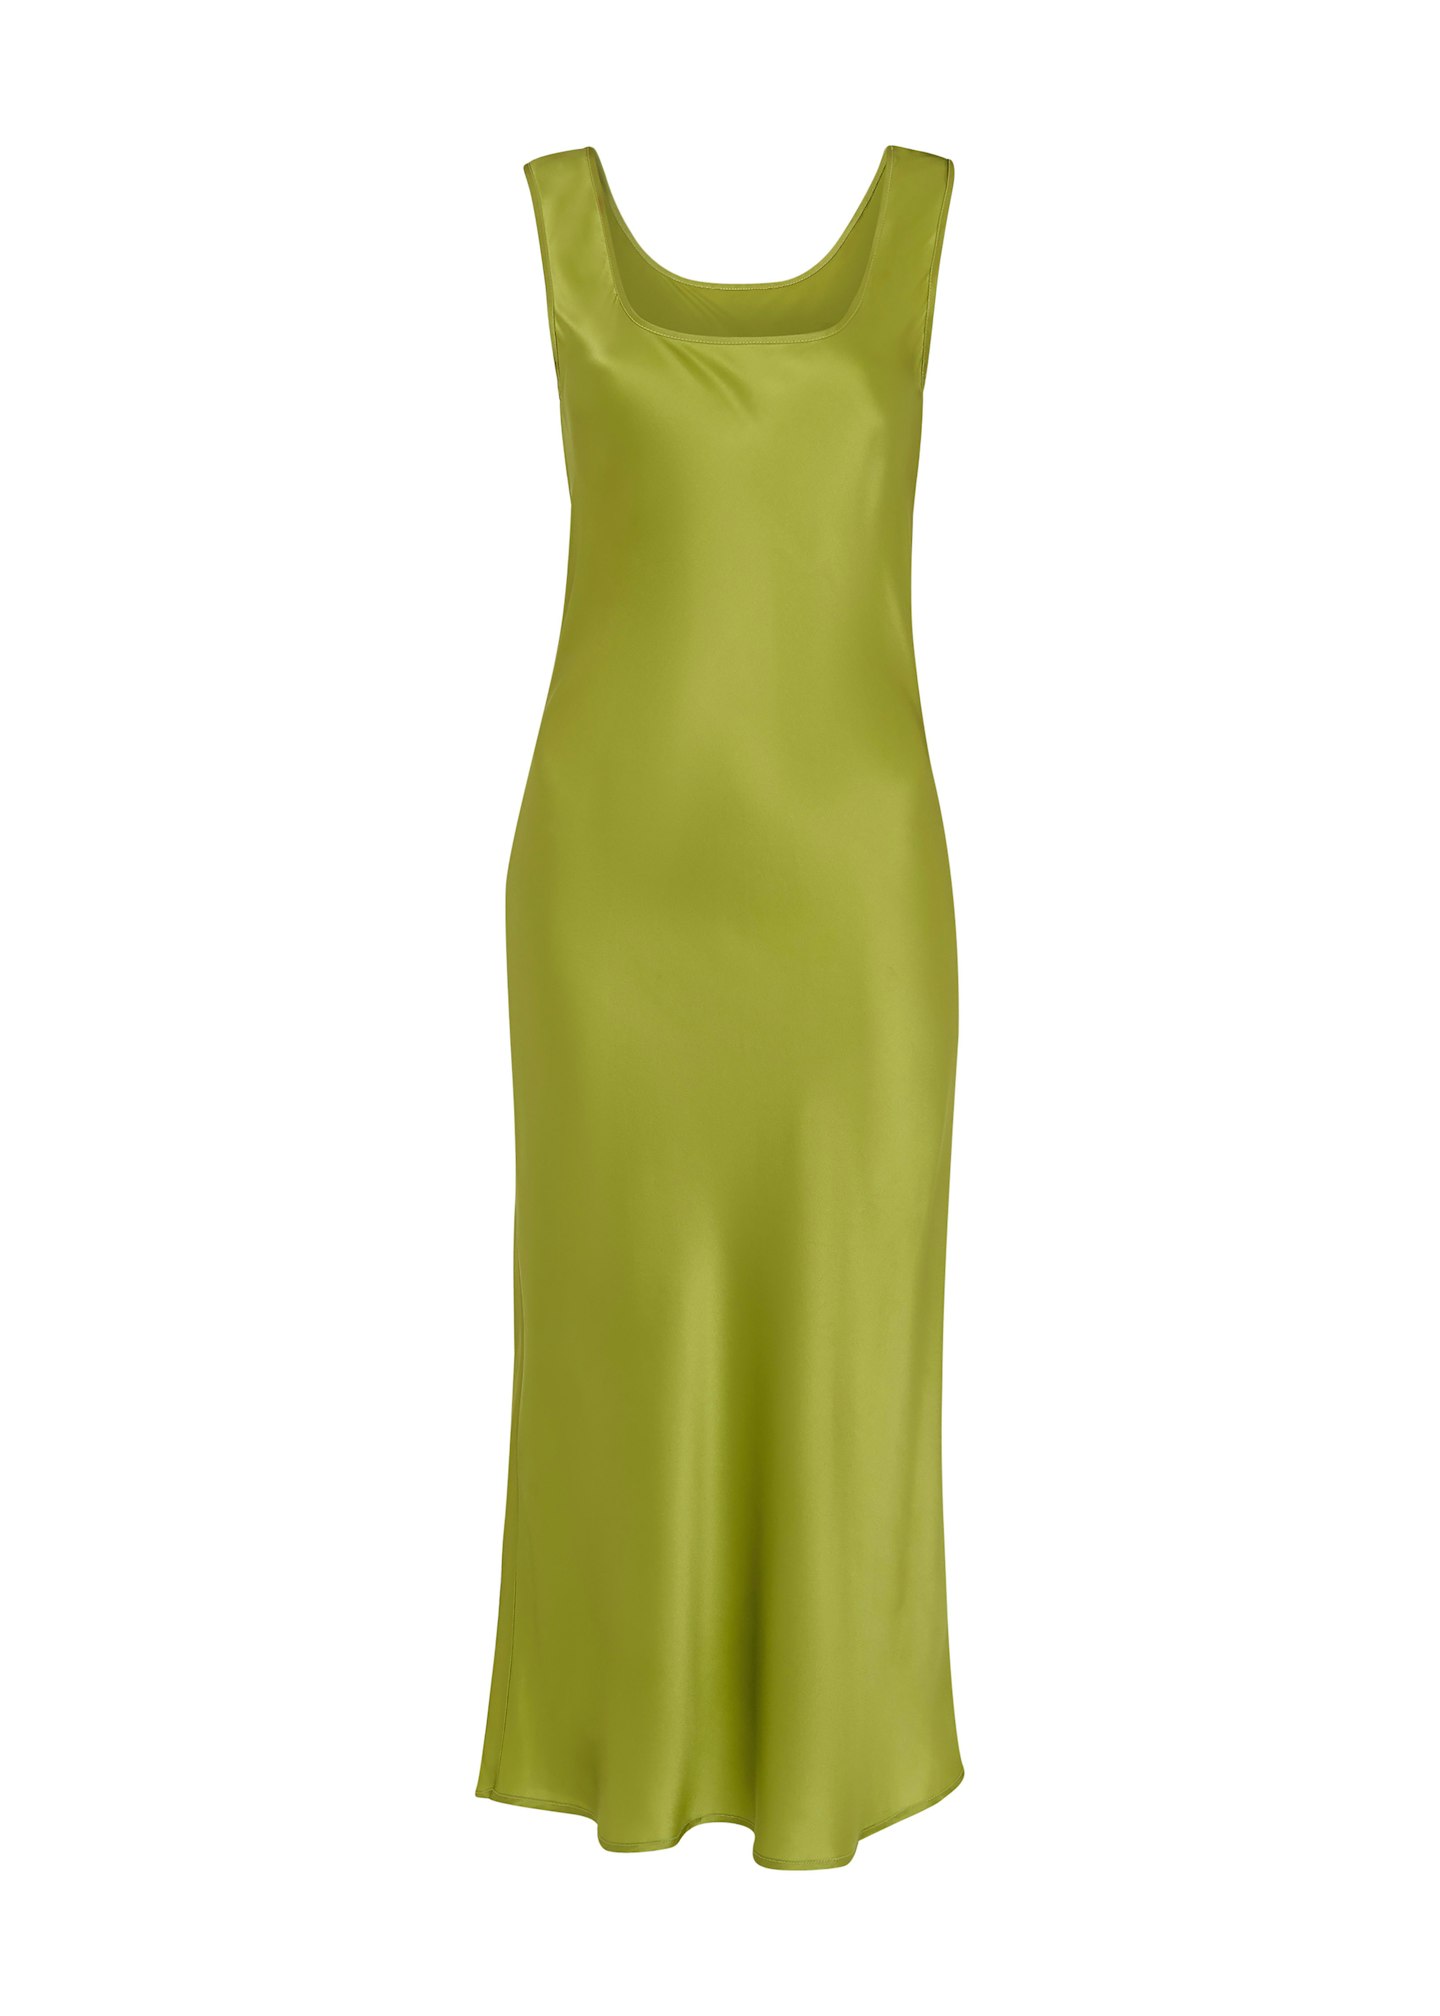 Whistles x Hai Collaboration Slip Dress in Green, £198